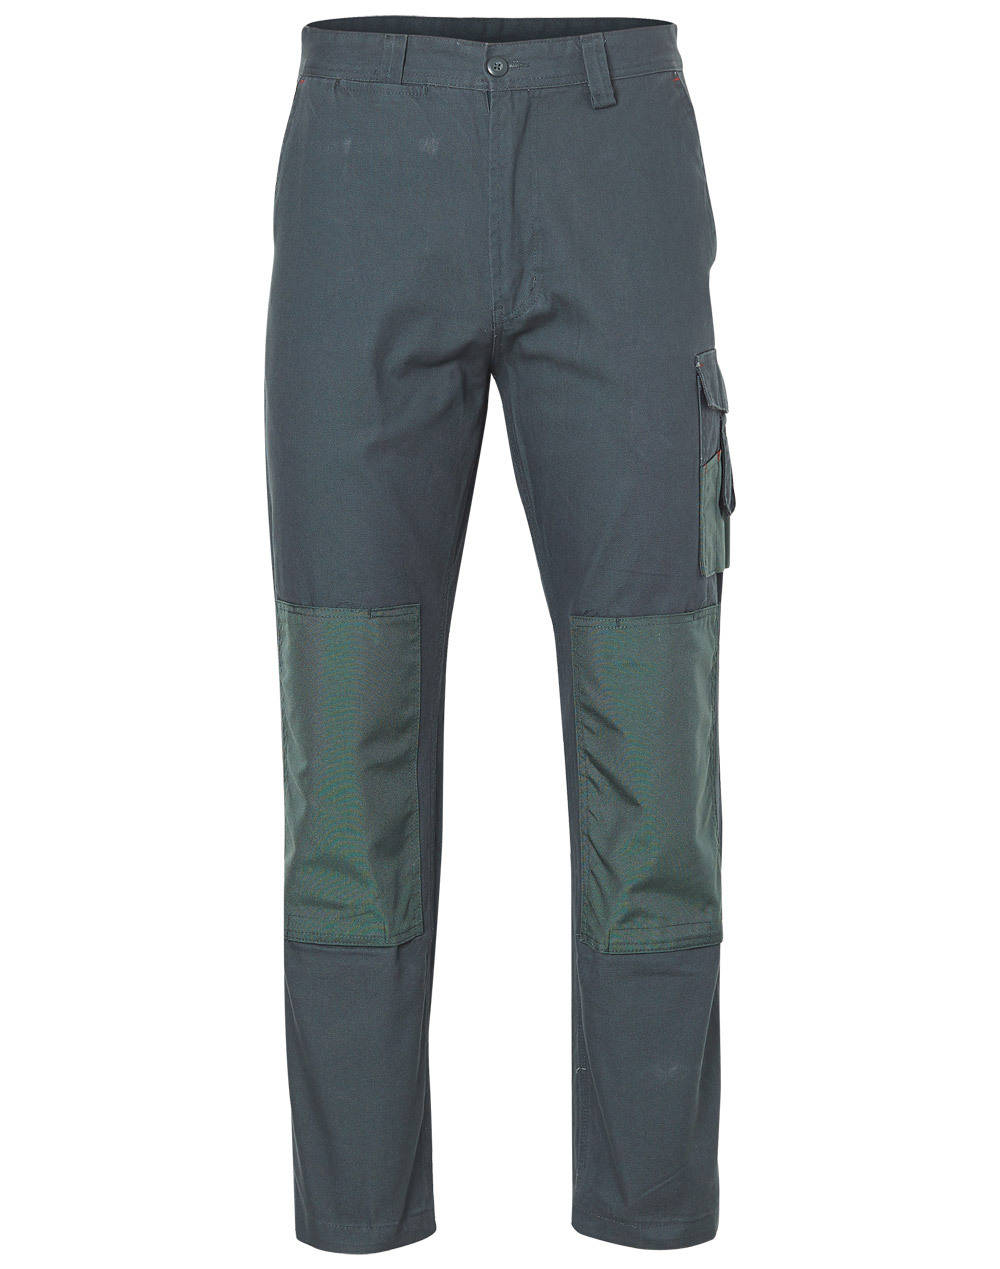 AIW WP17; STOUT Pants 100% CORDURA Fine Cotton w Knee pocket | eBay